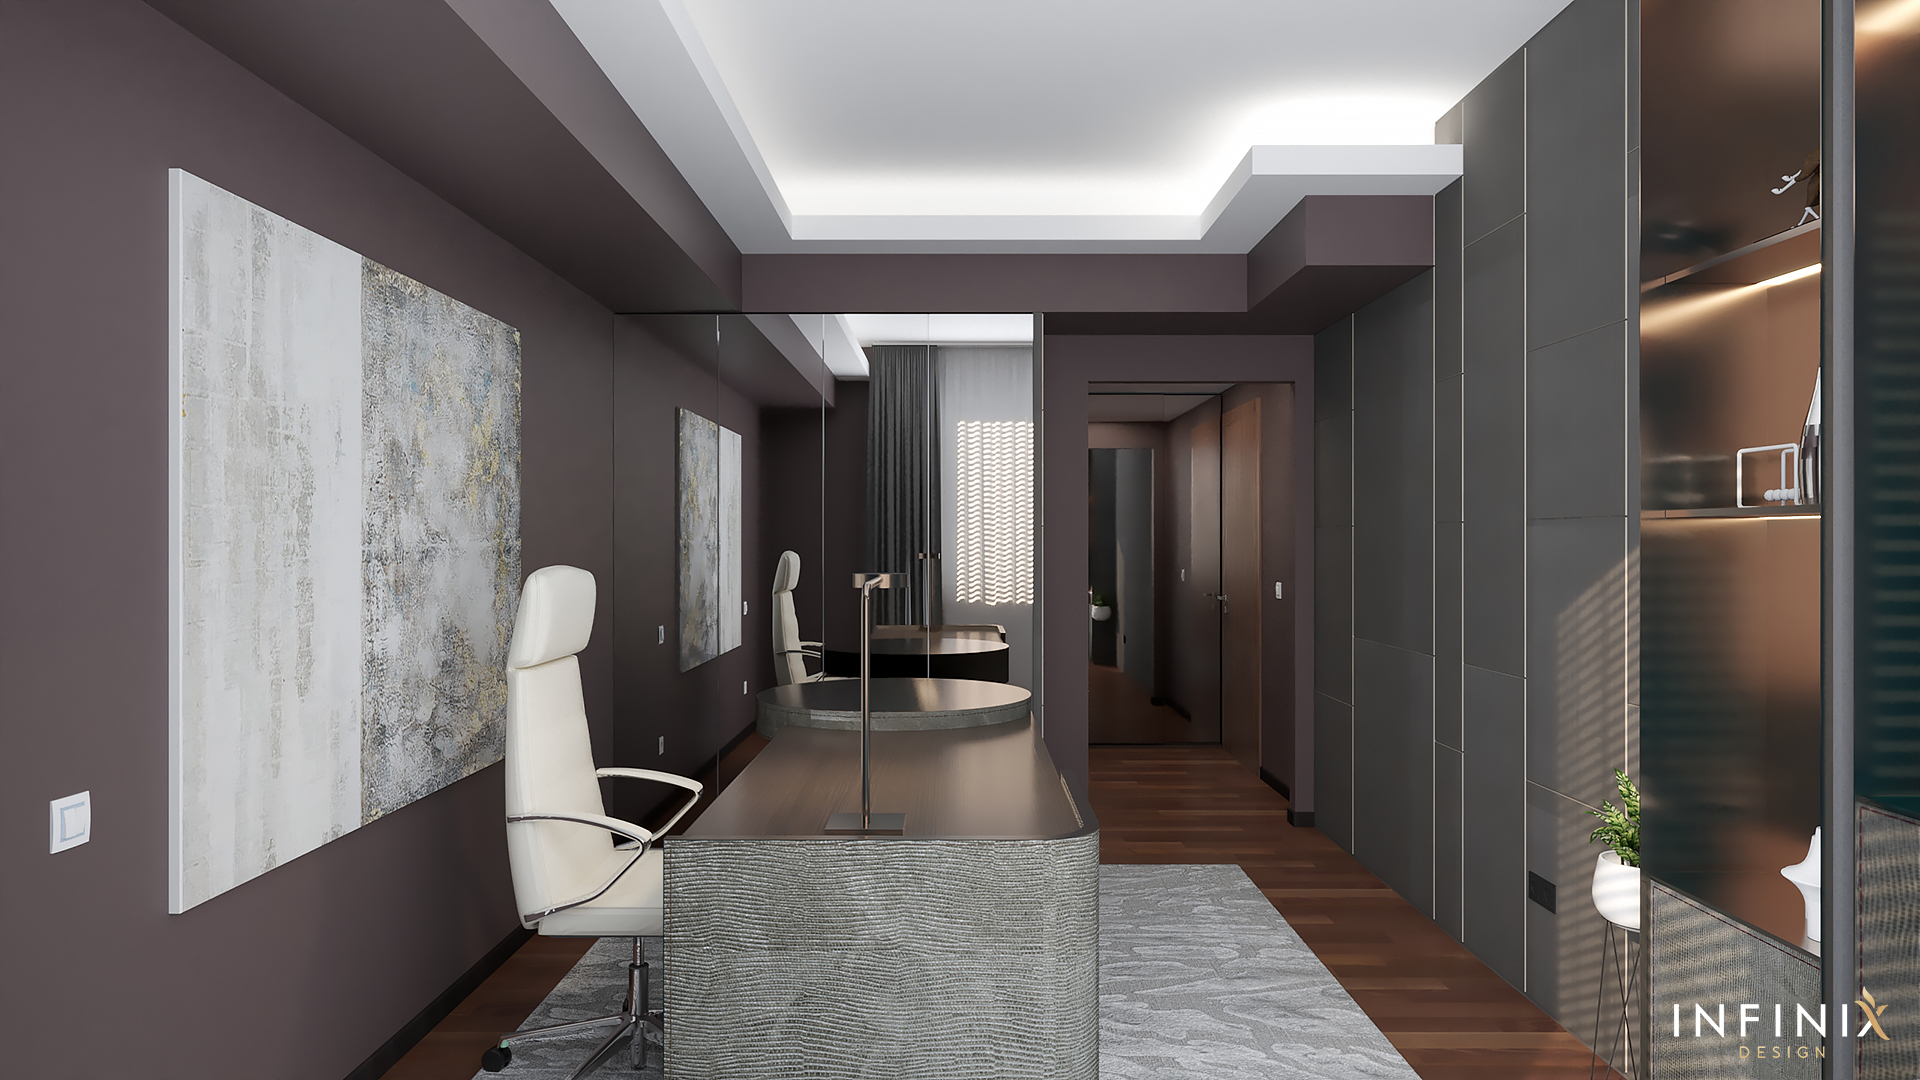 019.16_Infinix_design_interior_apartment conversion office - office 2